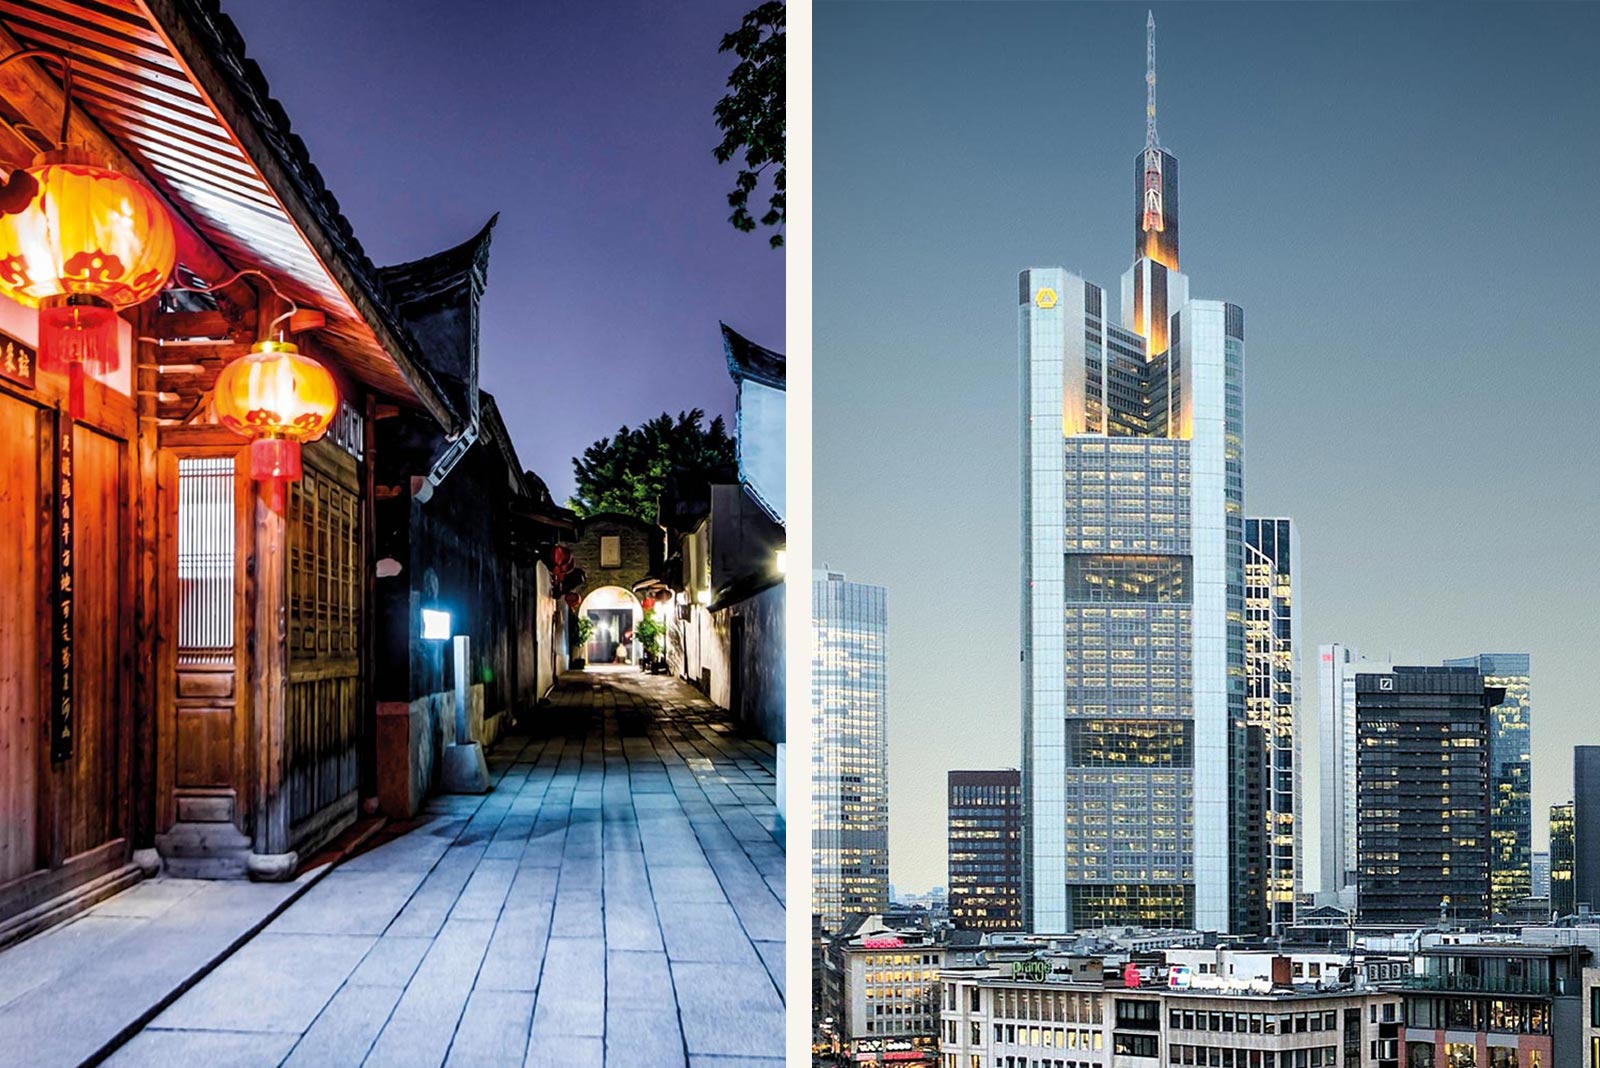 Architecture in Fuzhou, China and Frankfurt, Germany